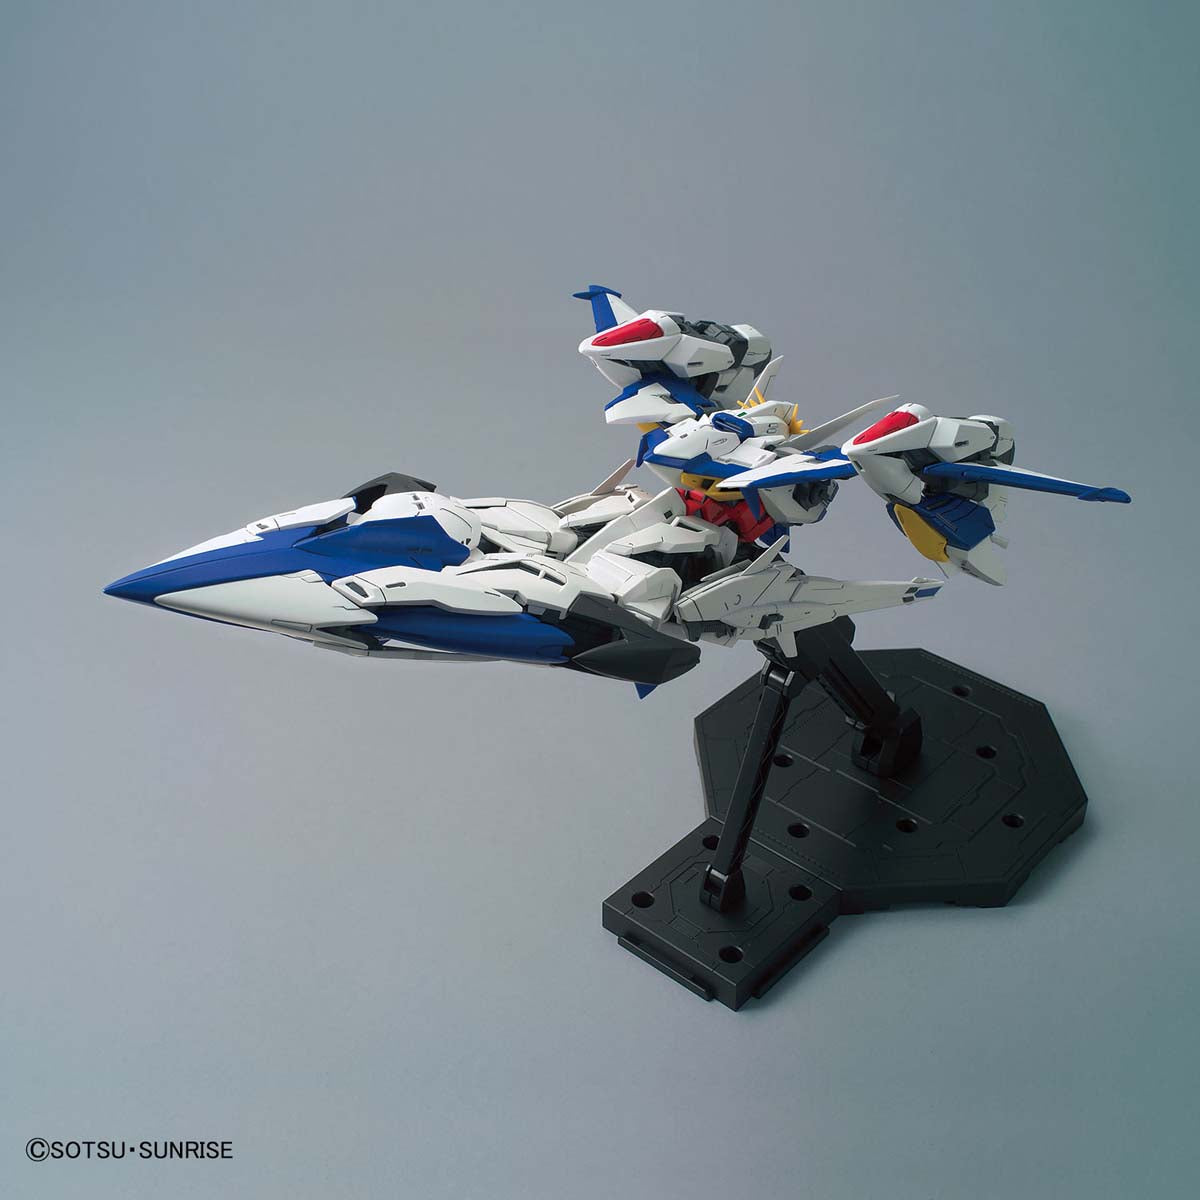 MG 1/100 Eclipse Gundam – Nii G Shop